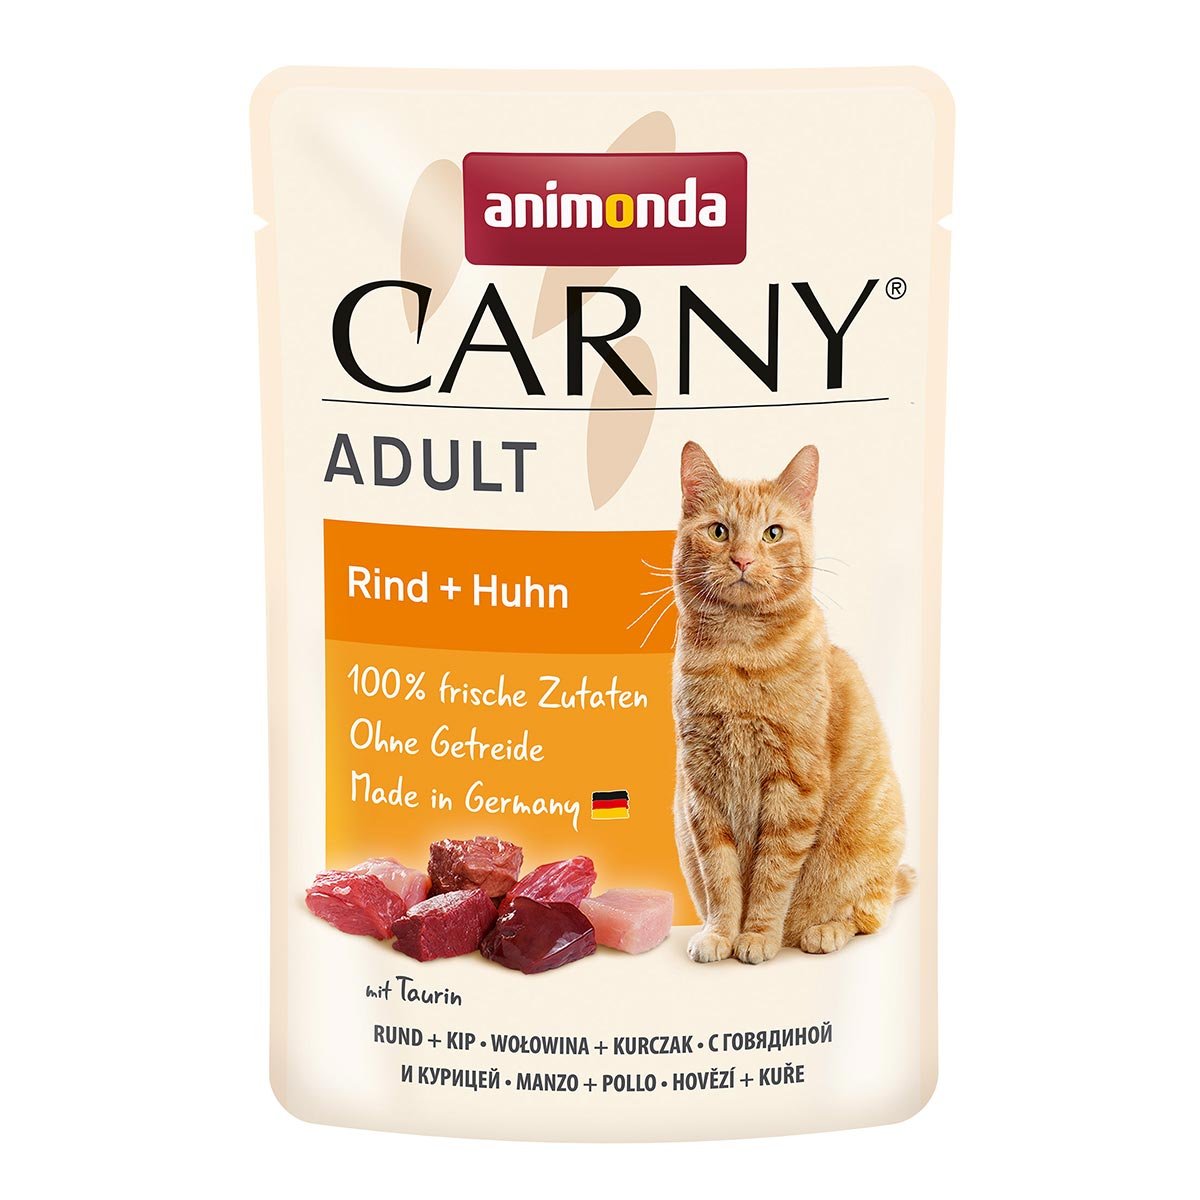 animonda Carny Adult Rind + Huhn 24x85g